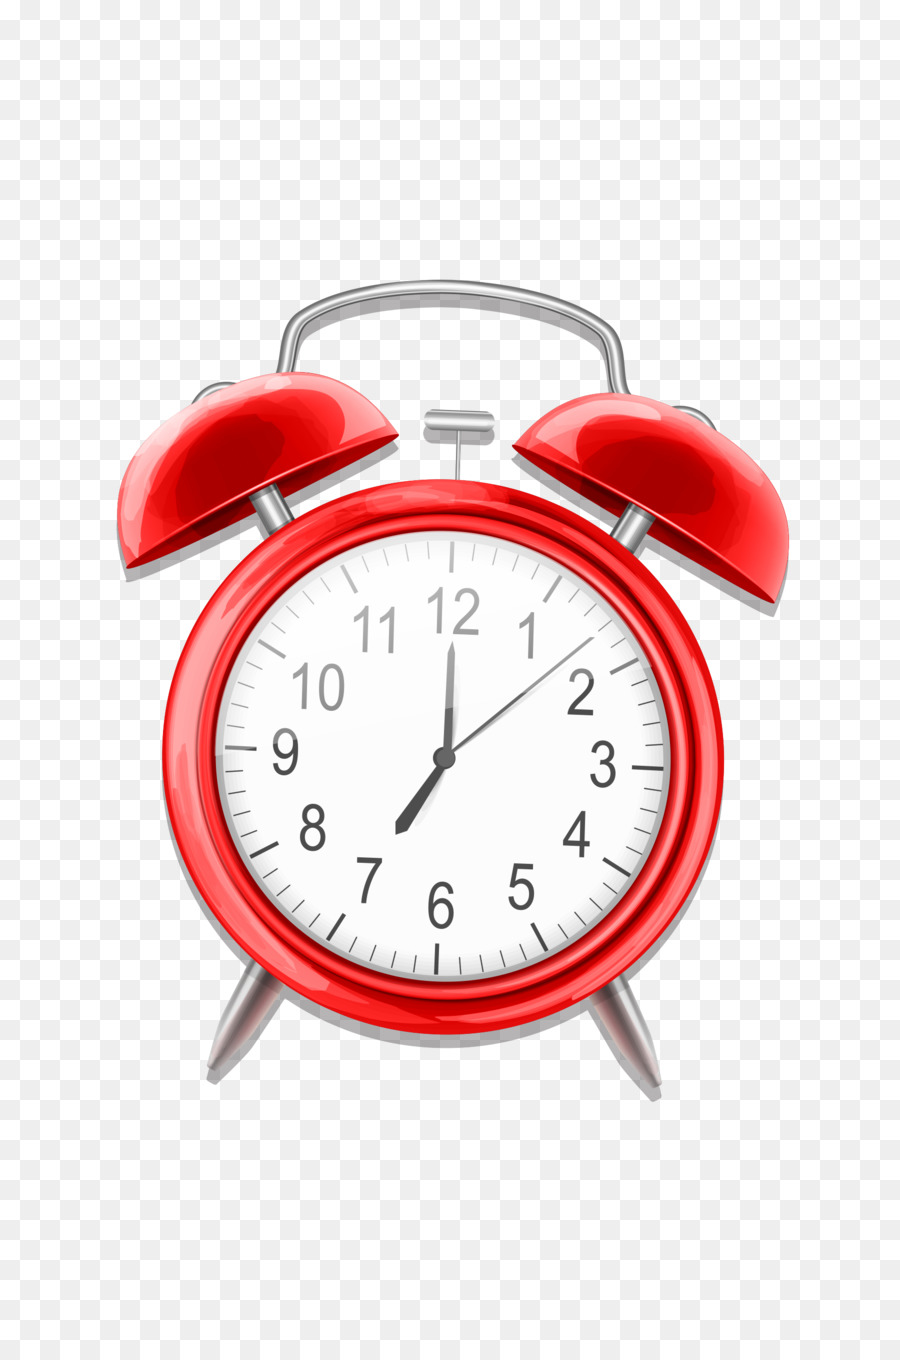 Alarm clock Watch - Red alarm clock png download - 1800*2699 - Free Transparent Alarm Clock png Download.